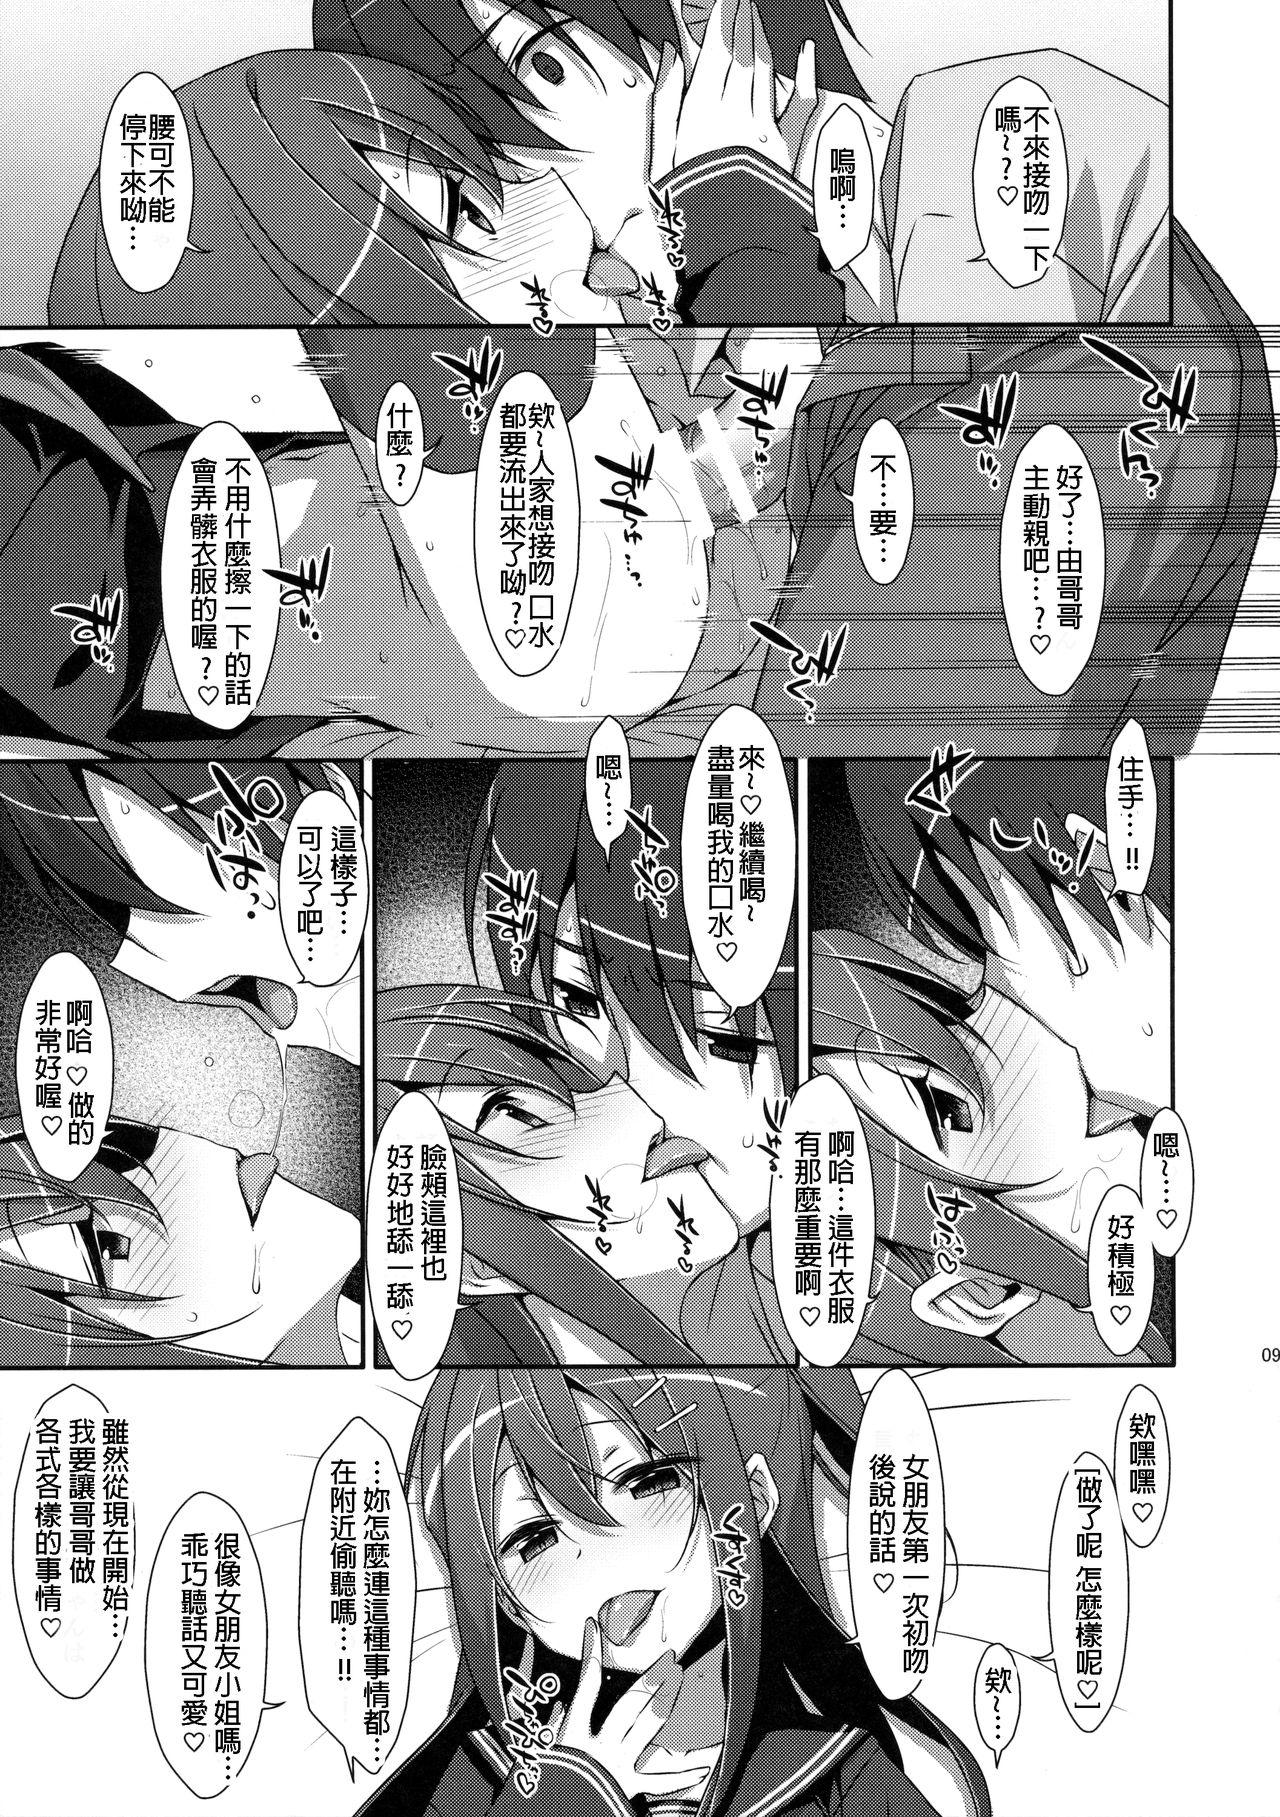 Curious Watashi no, Onii-chan 4 Black Dick - Page 9